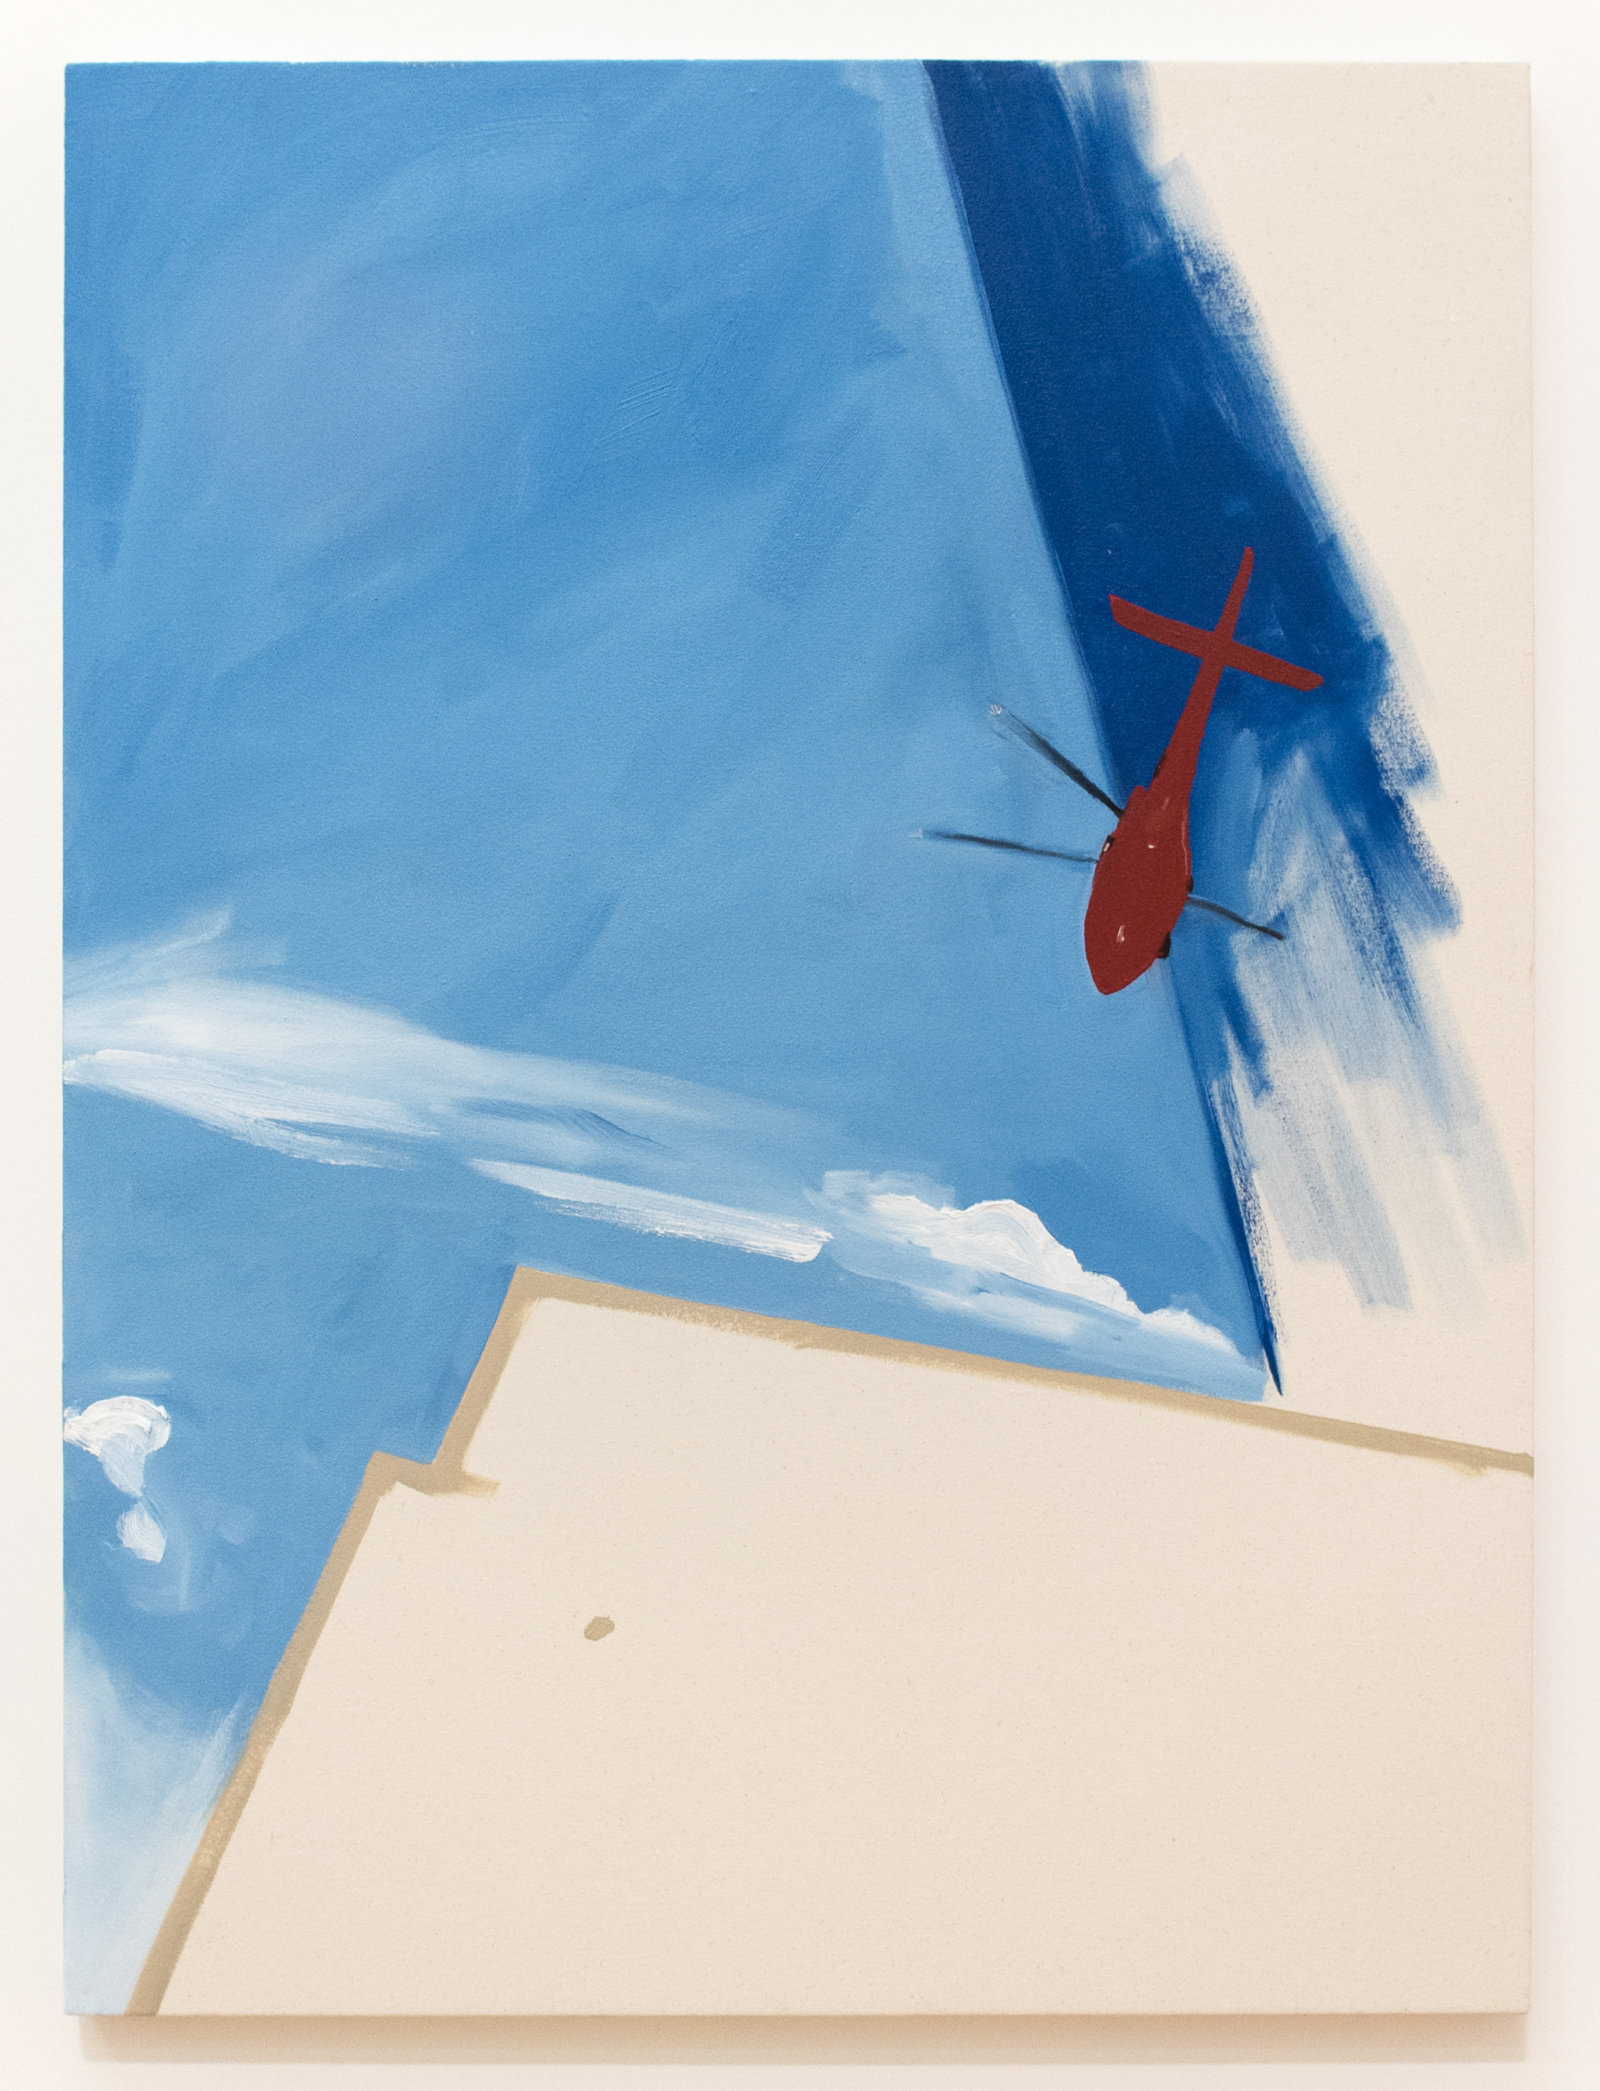 Brenda Draney, Lift, 2019, oil on canvas, 48 x 36 in. (122 x 91 cm)